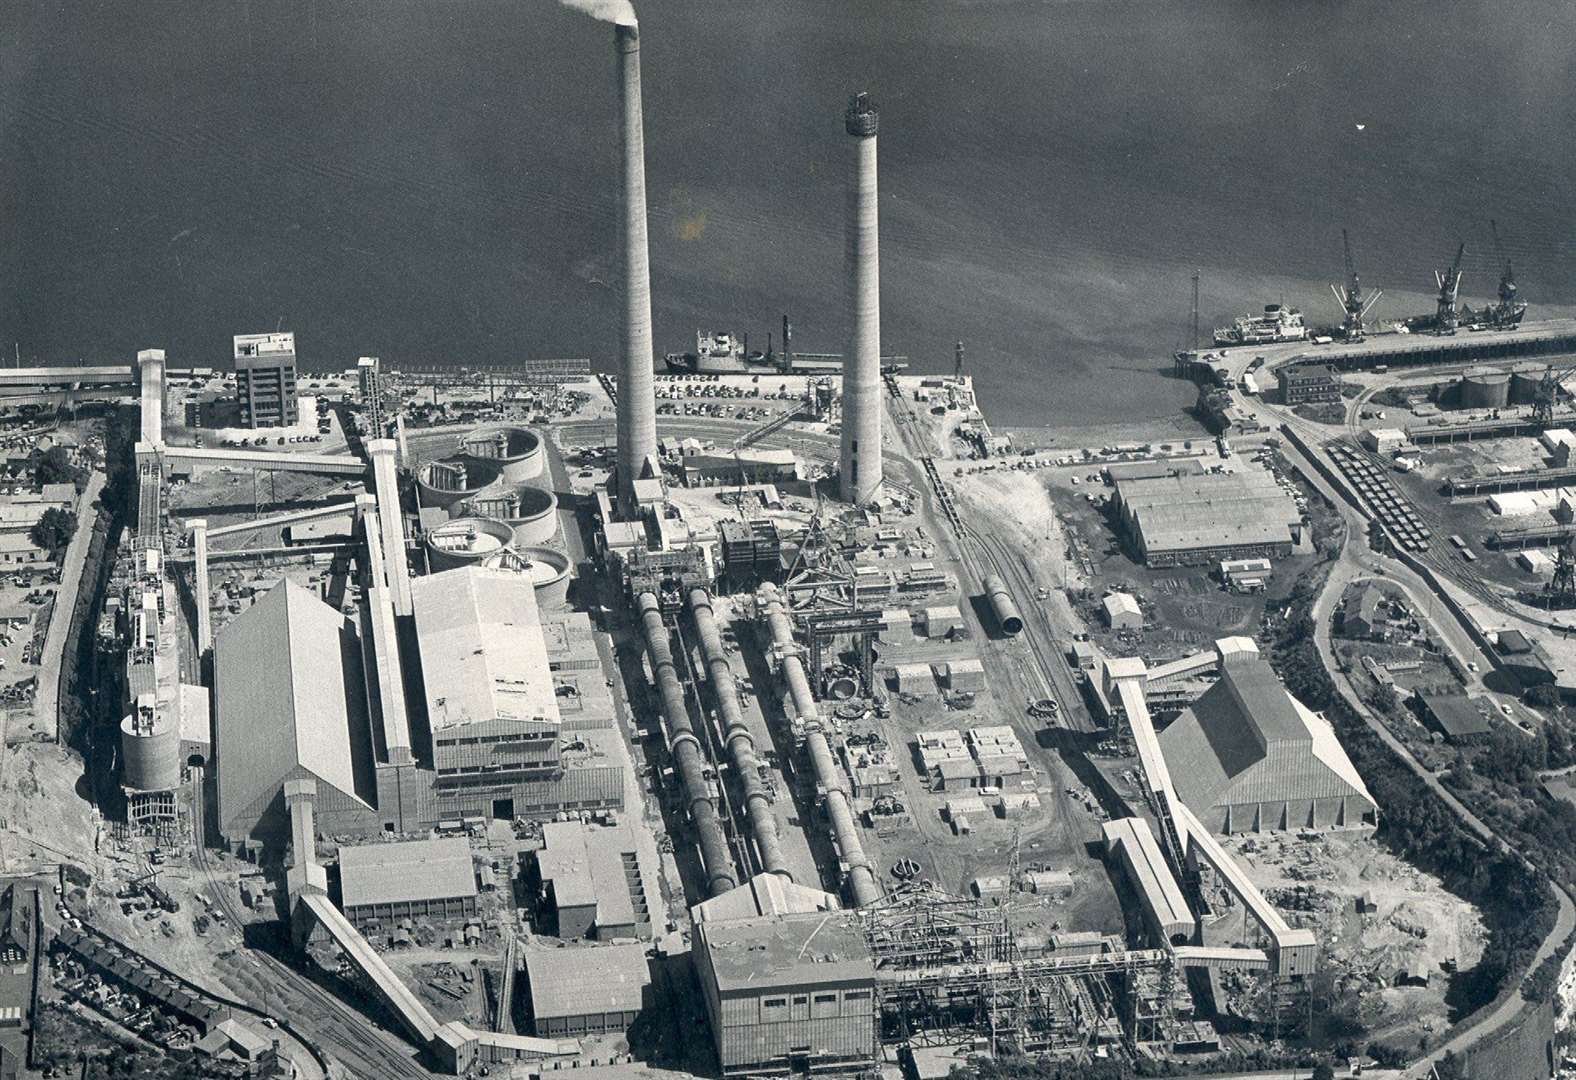 The Northfleet Cement Works. Photo taken in July 1970.